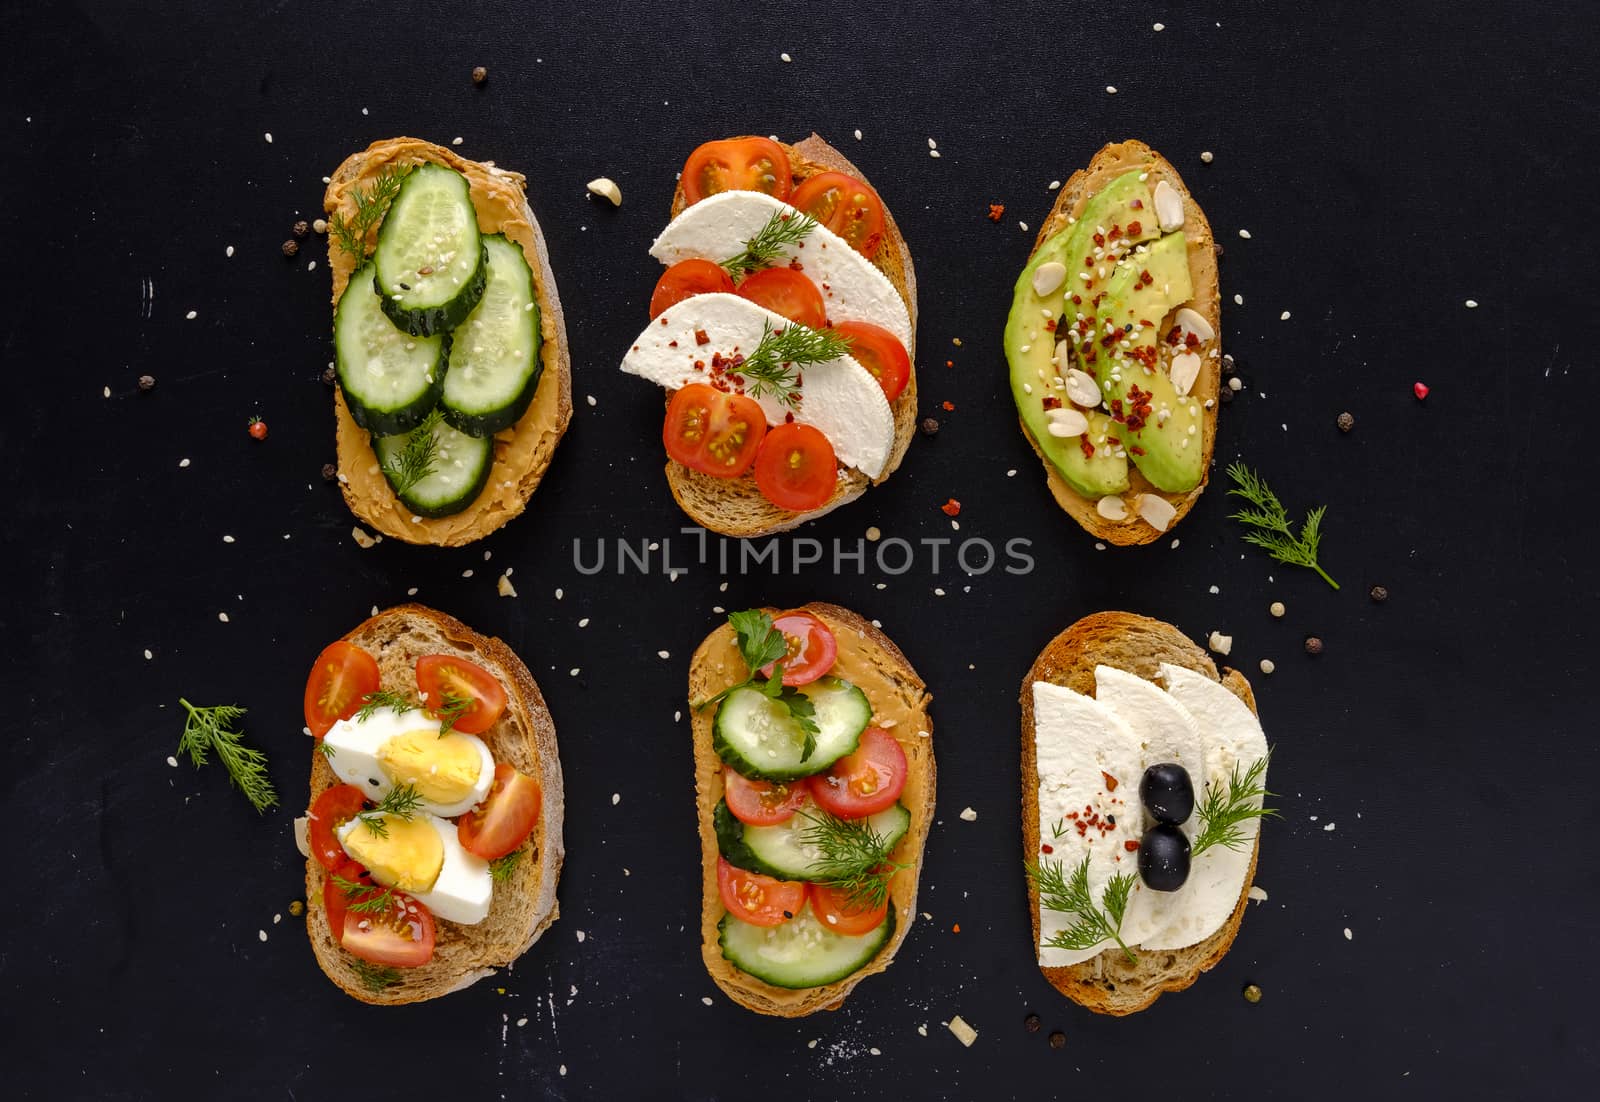 Set of fresh sandwiches snacks by sergii_gnatiuk